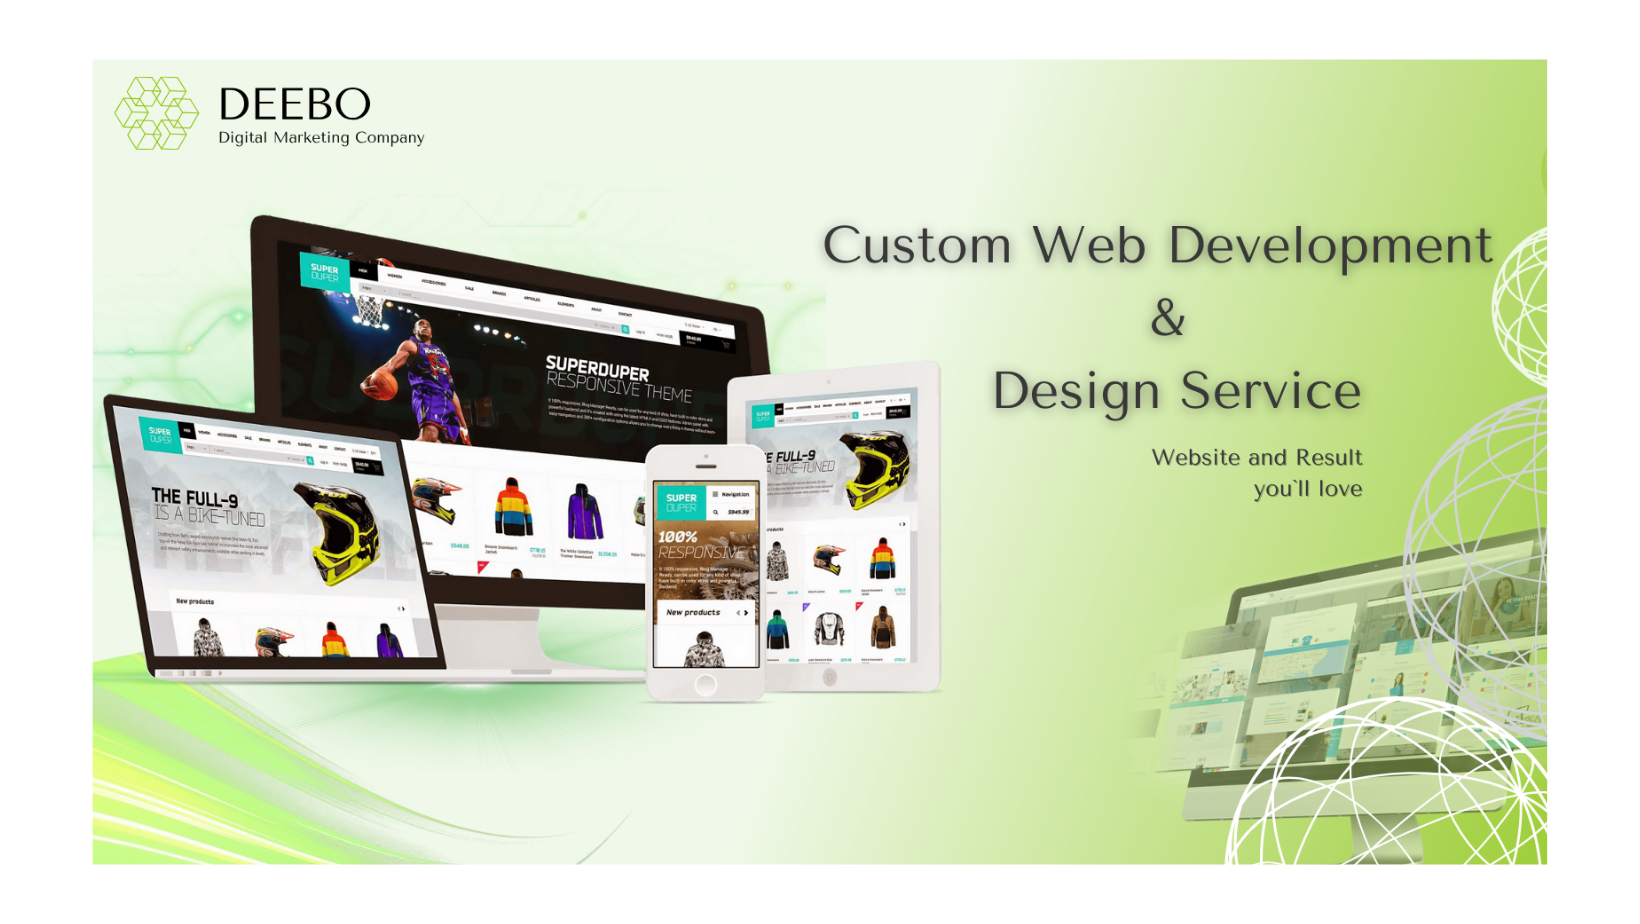 Custom Web Development & Design Service